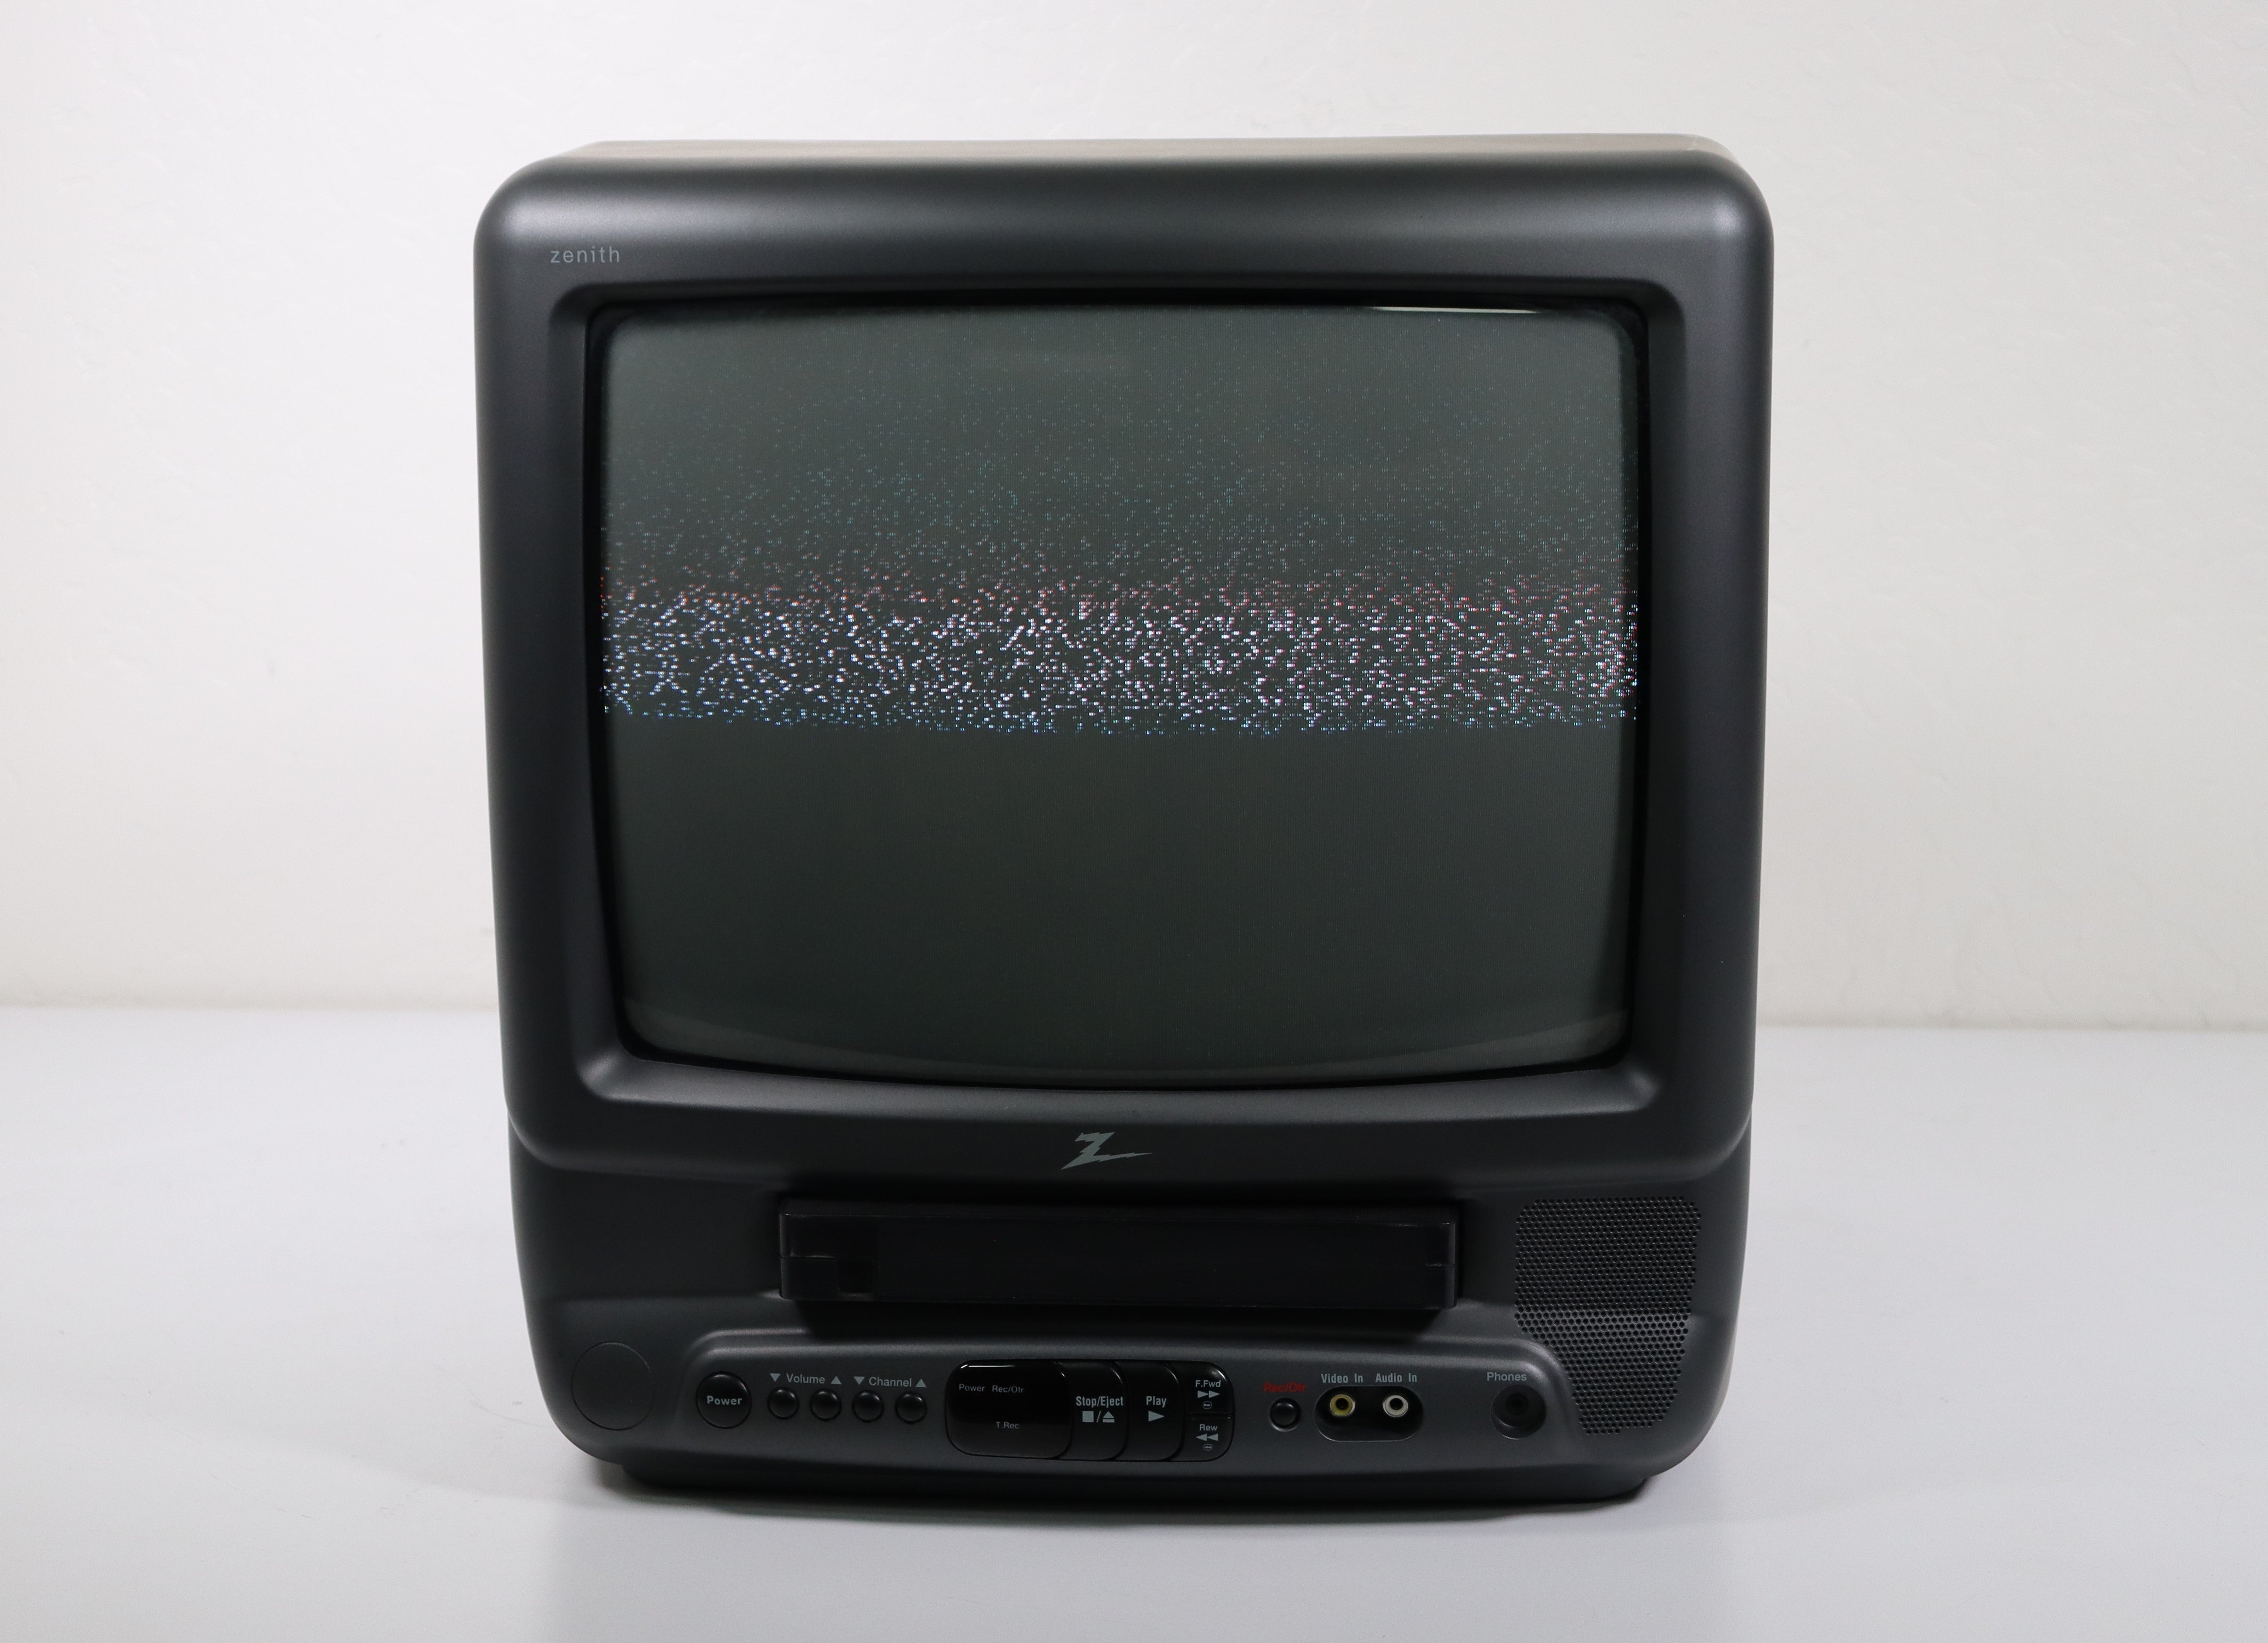 Small 10 Box TV/Vcr Combo T.V. Auction